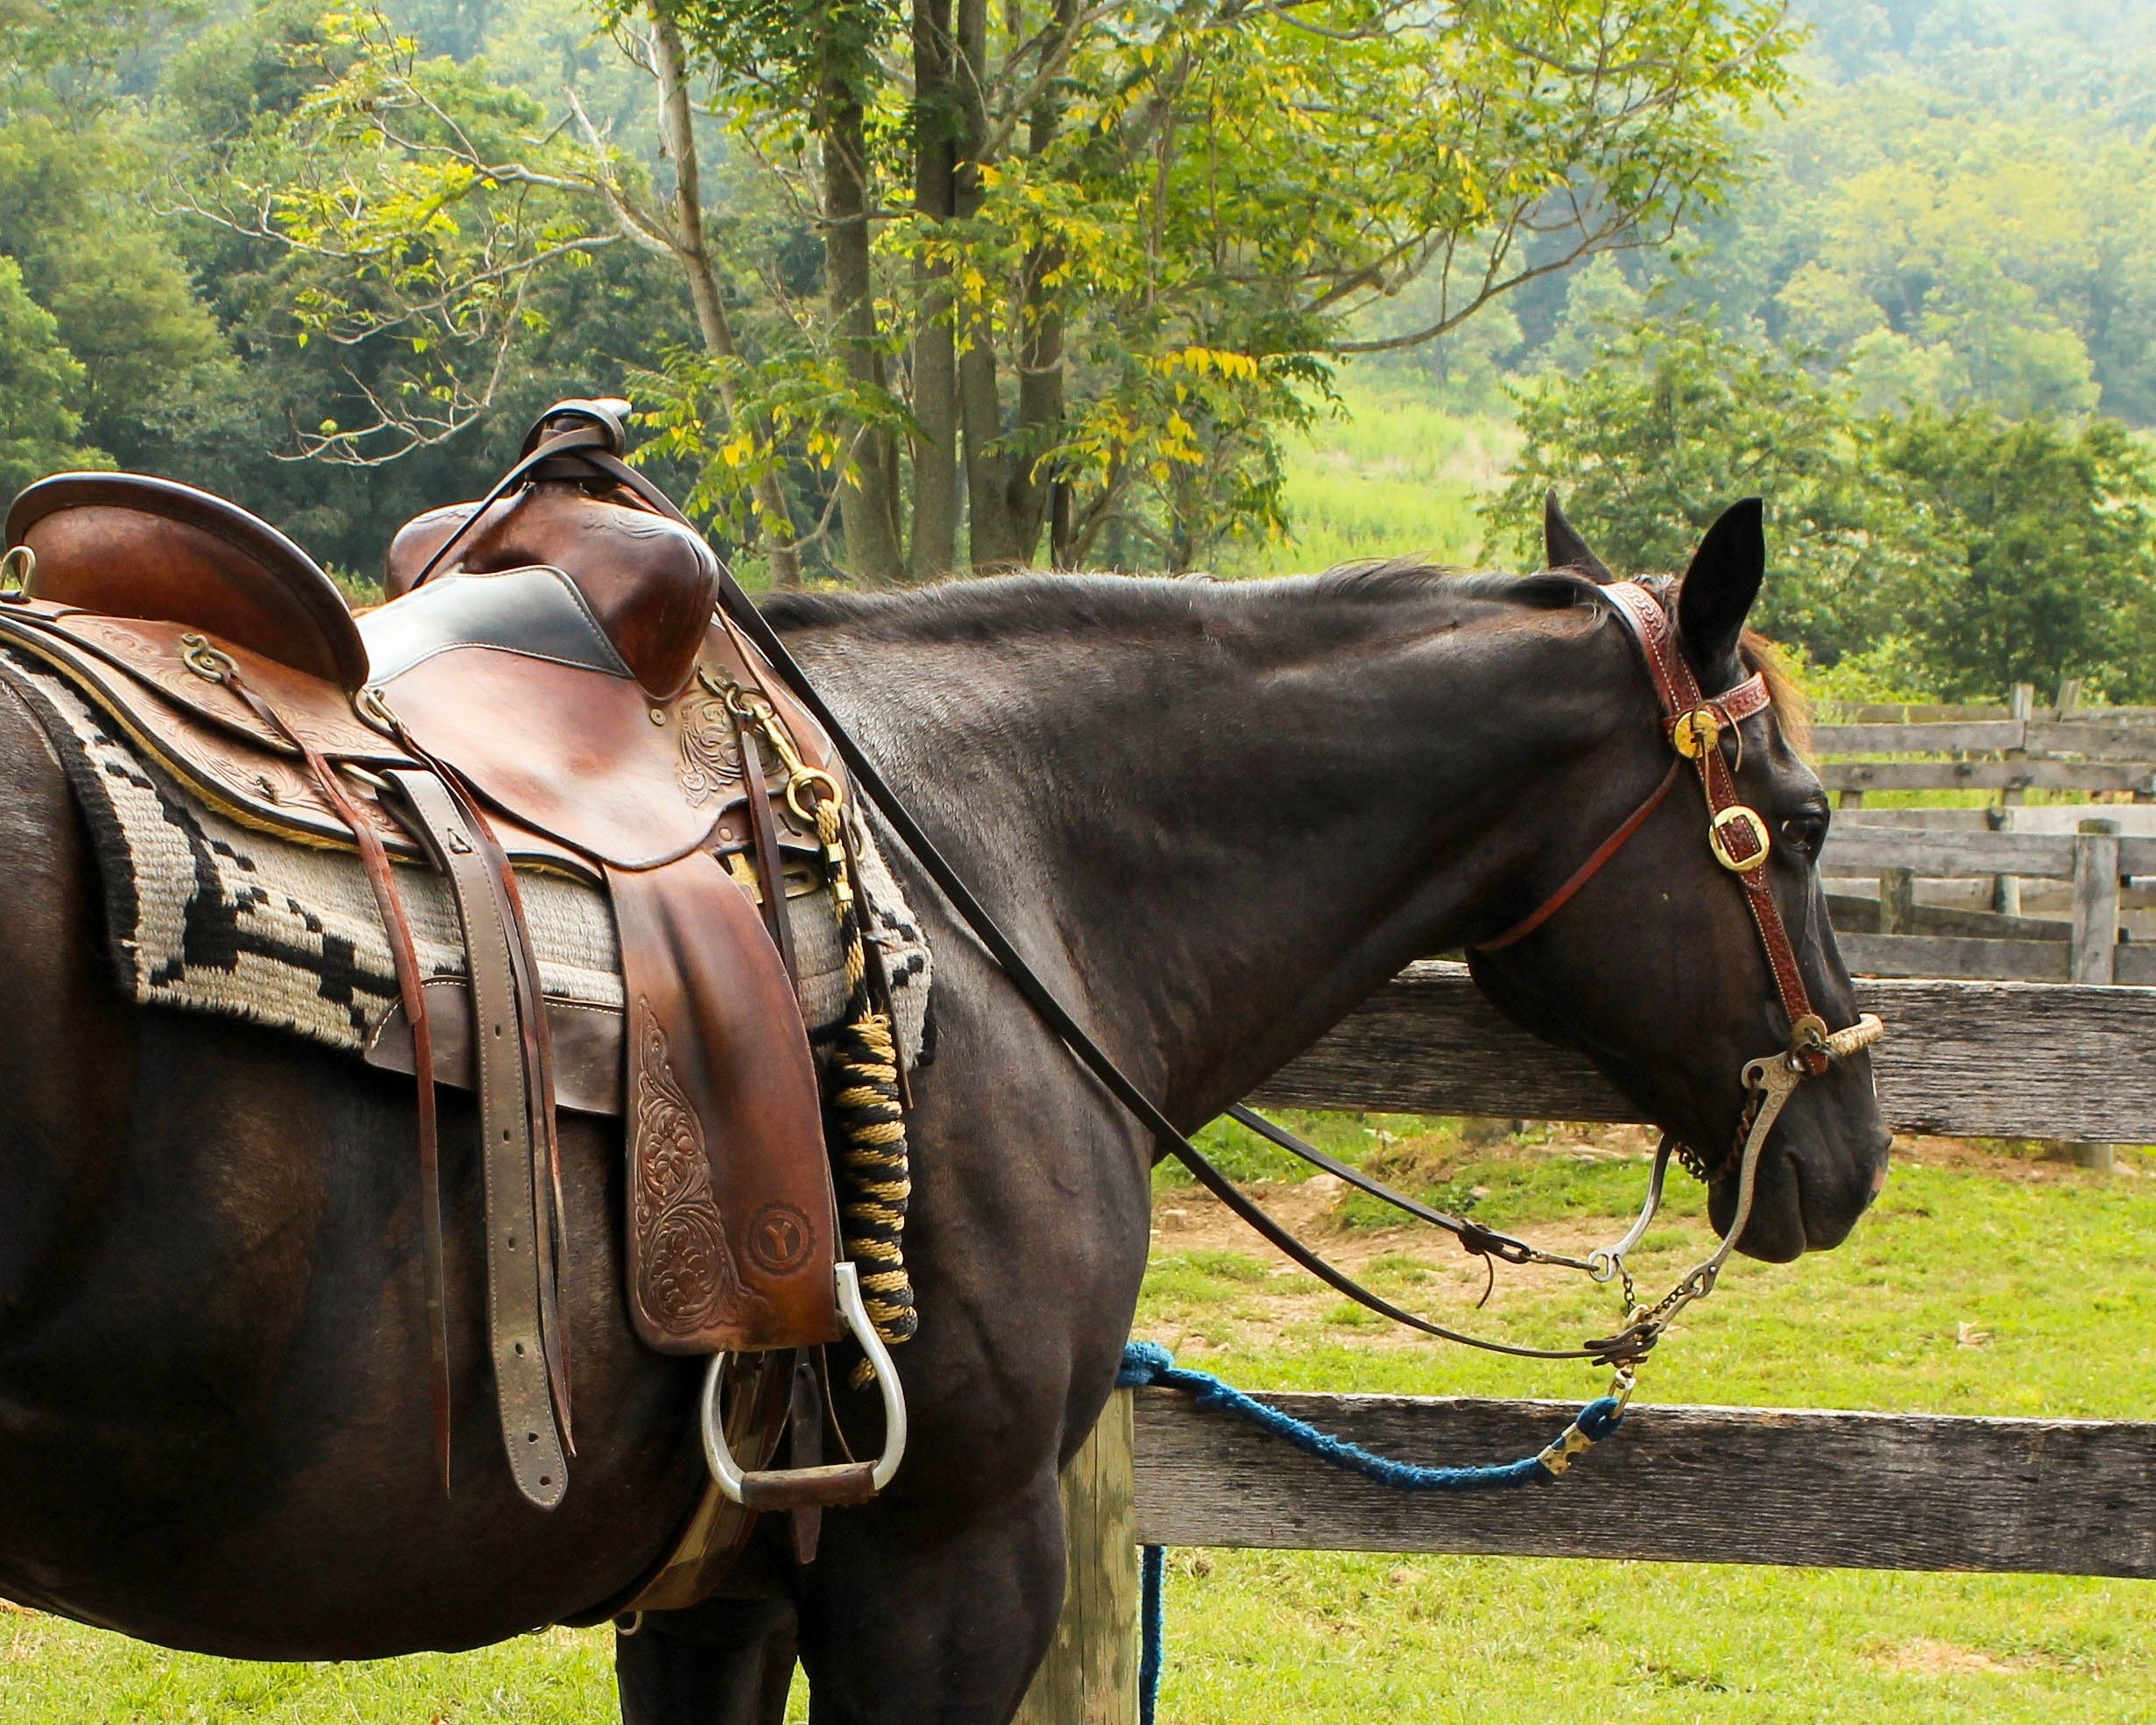 Horse with saddle on it